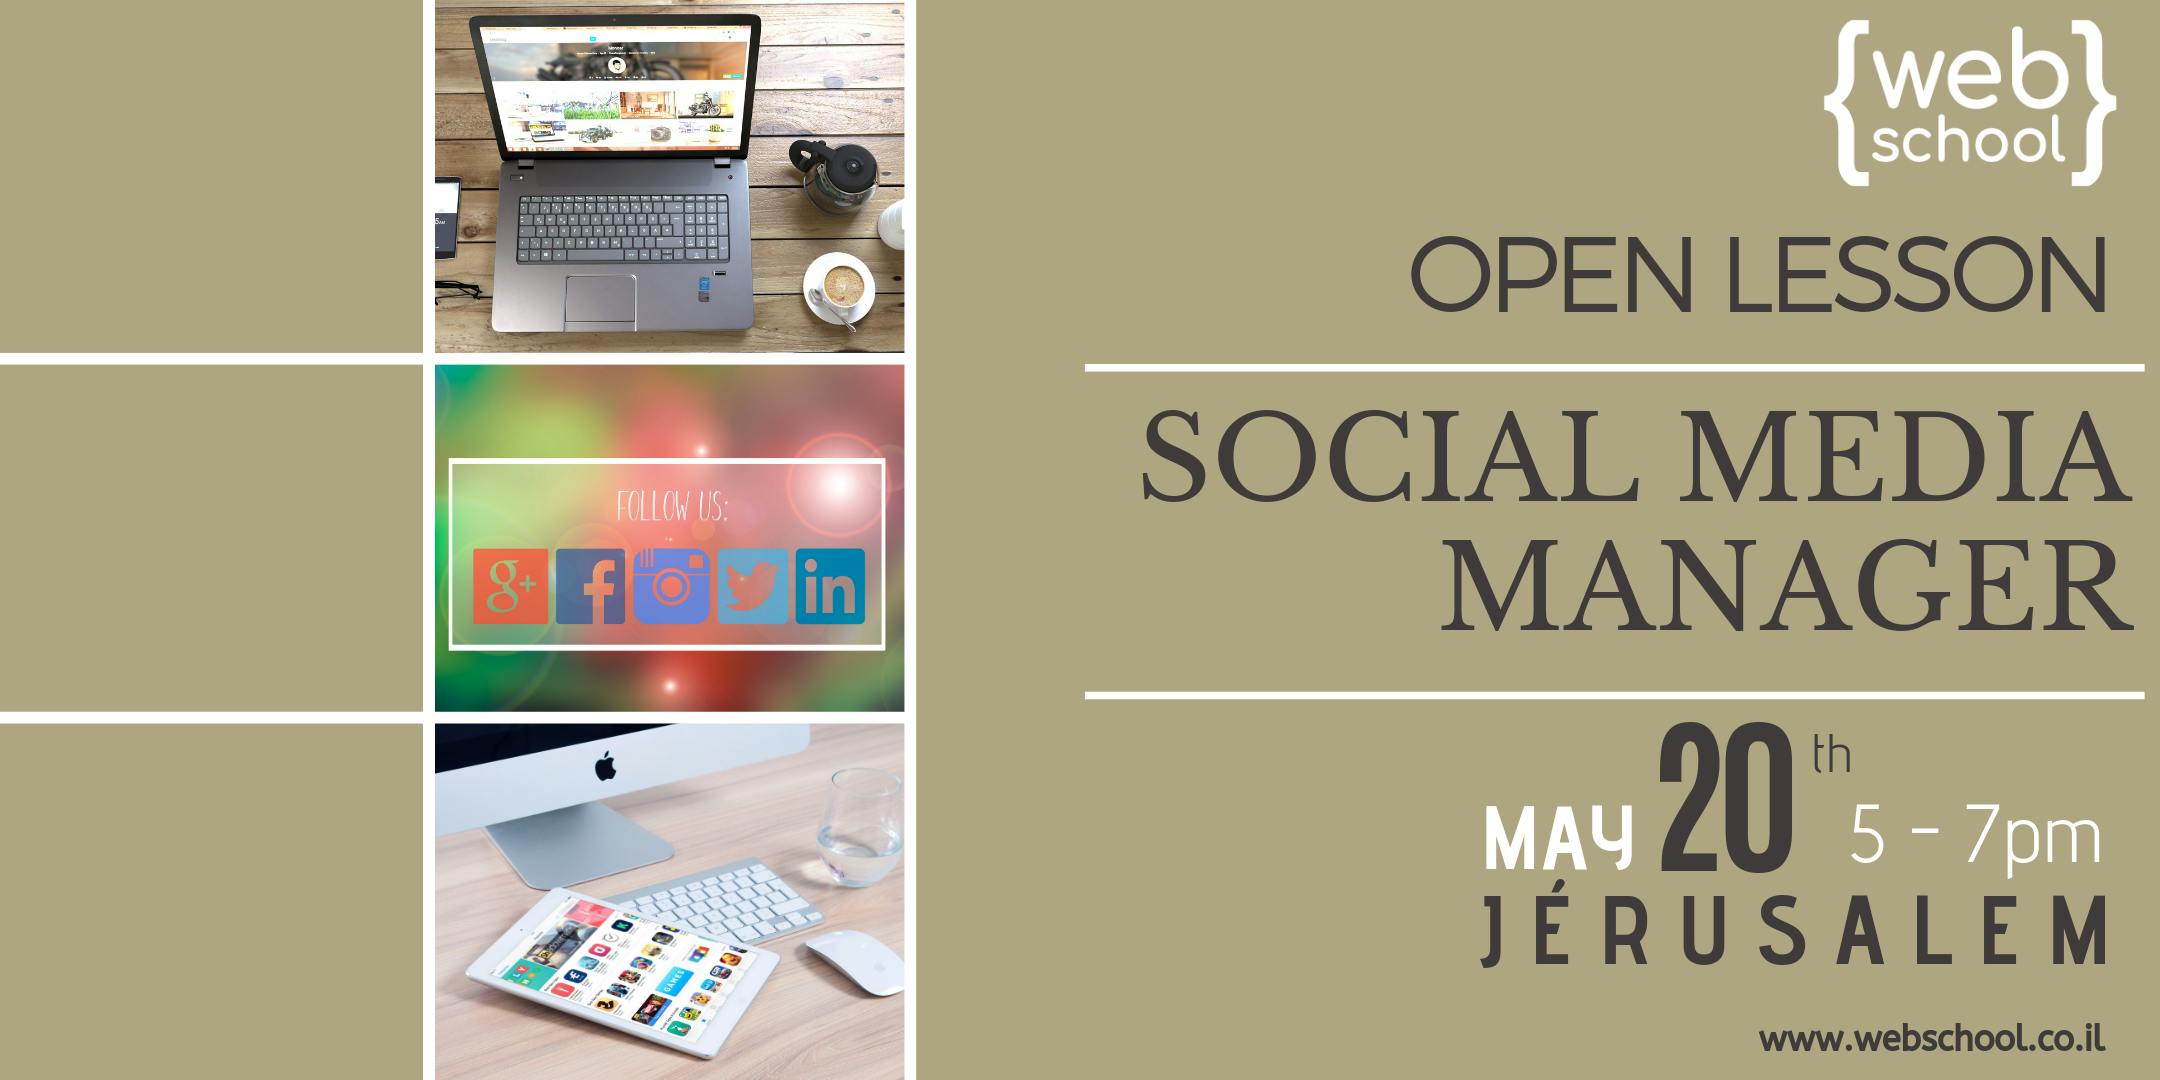 OPEN LESSON - SOCIAL MEDIA MANAGER - WEBSCHOOL JLM